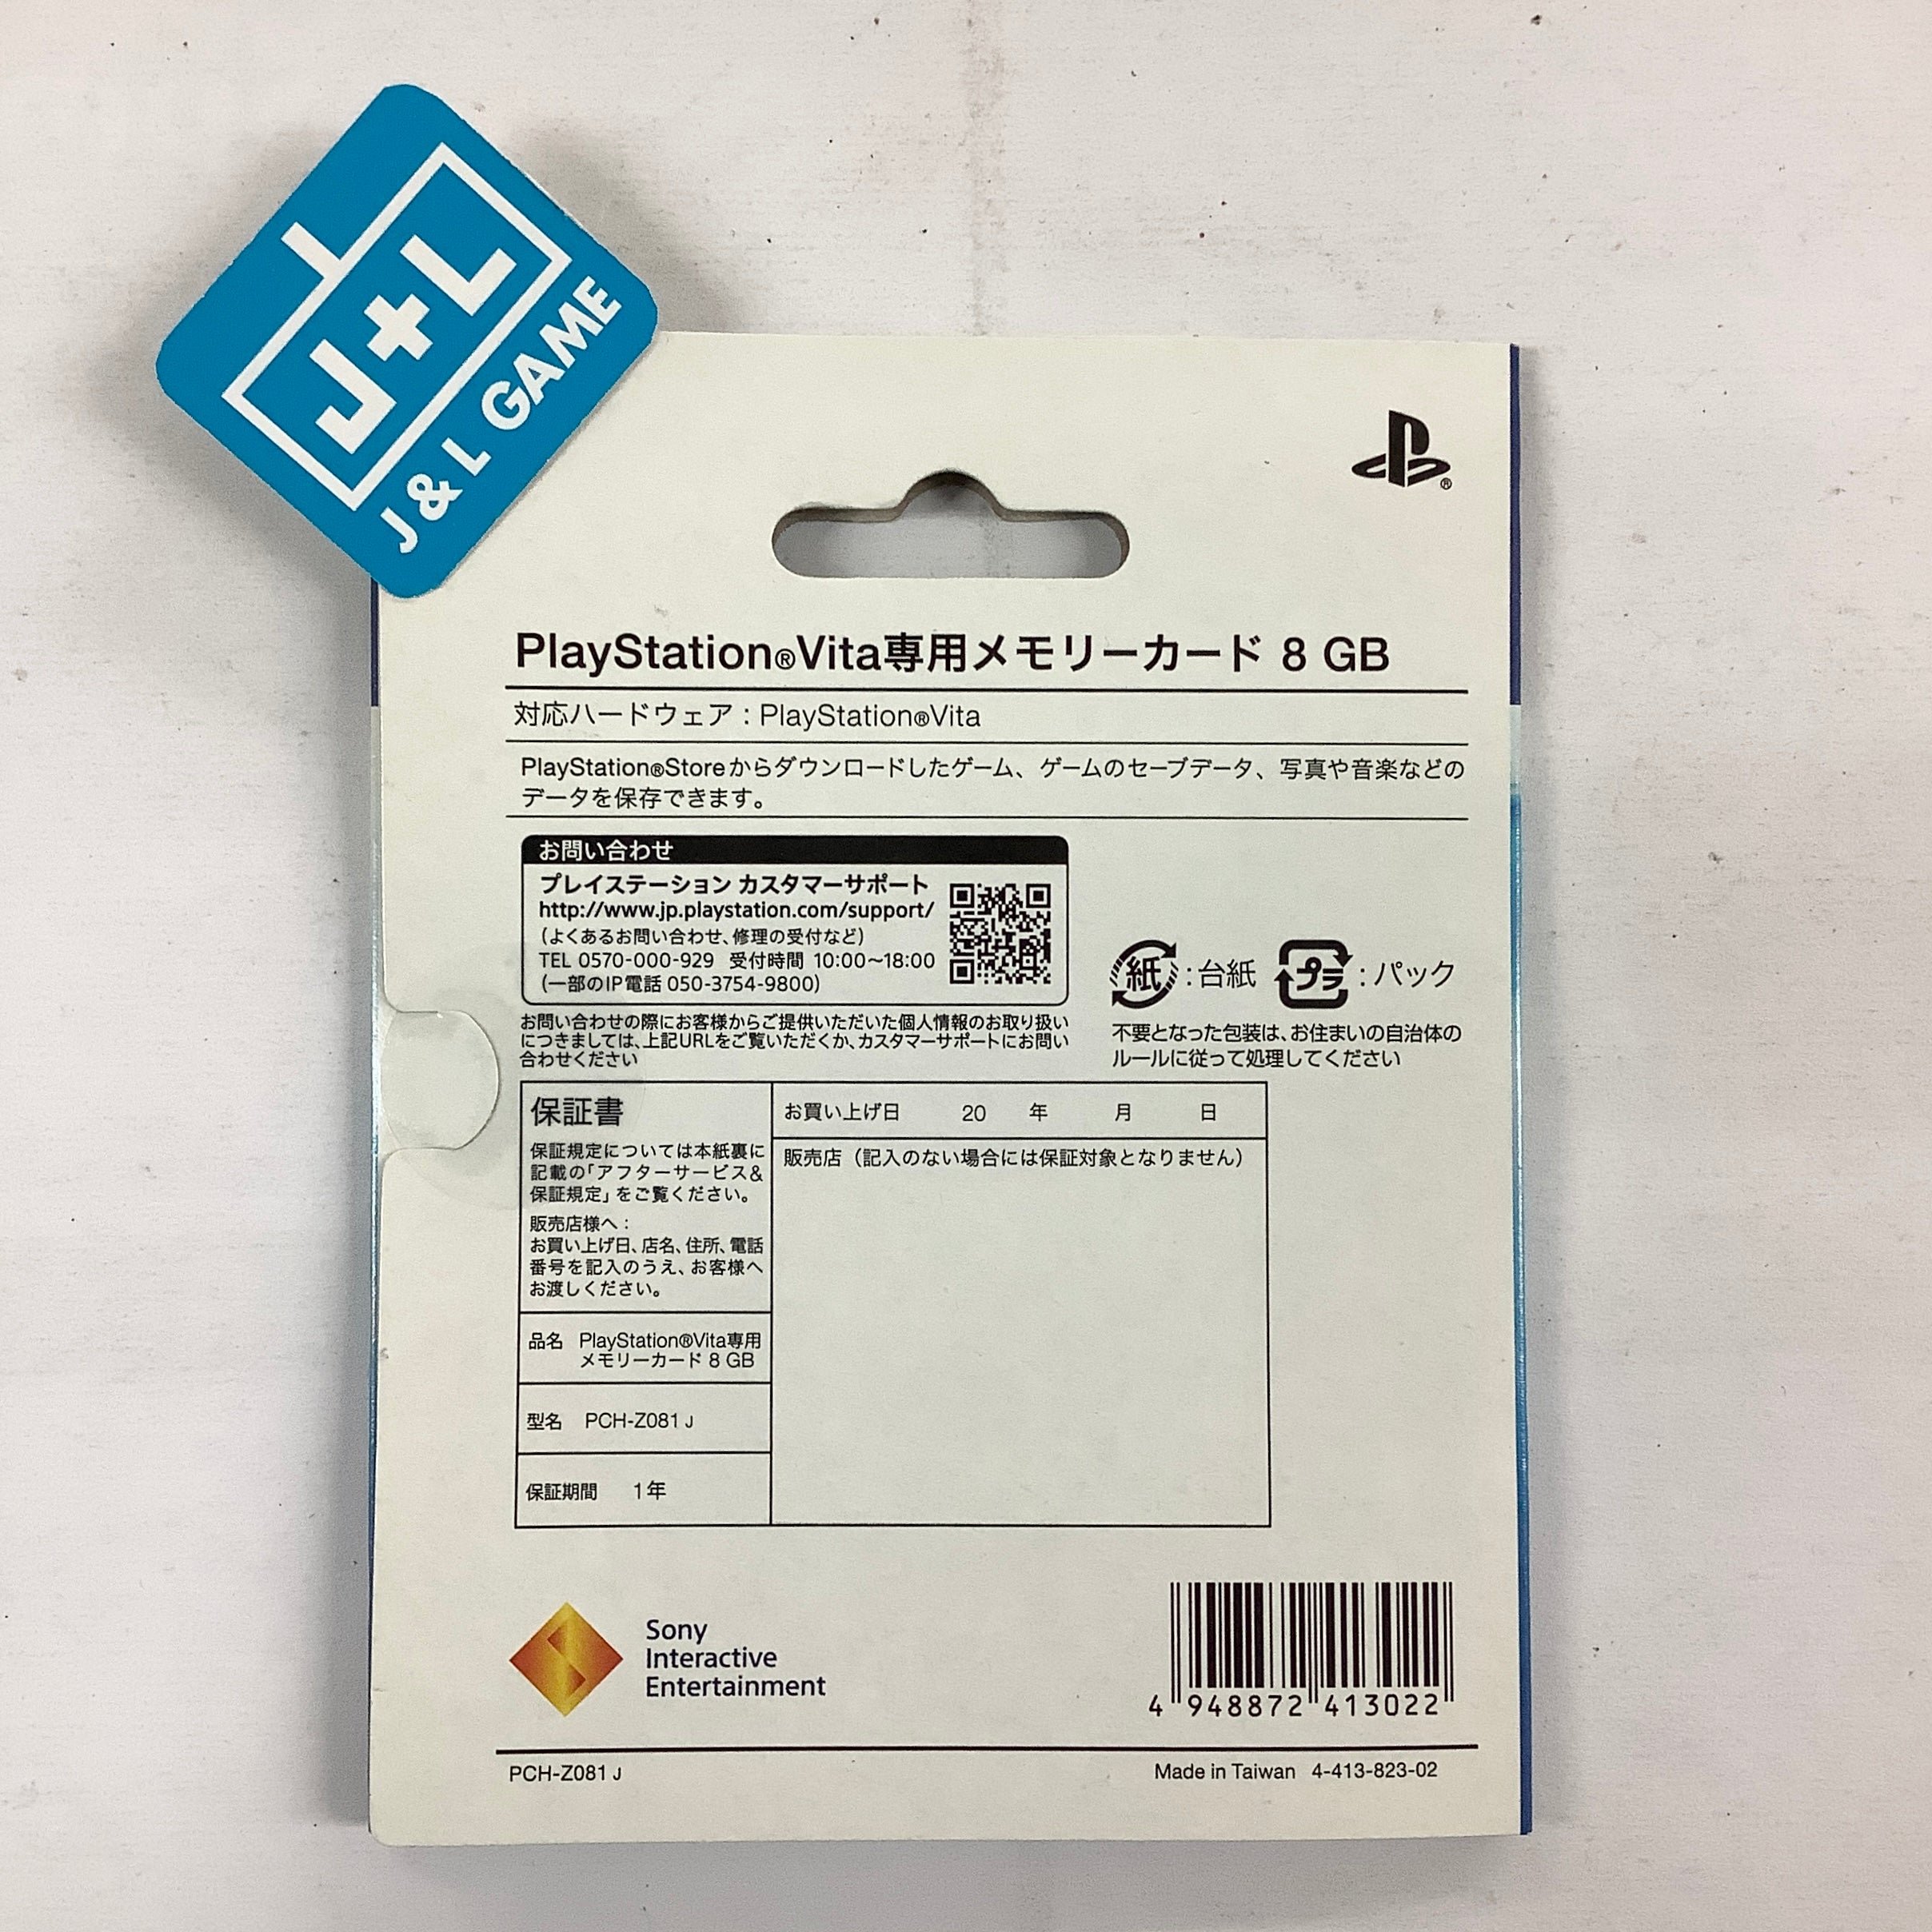 SONY Vita 8GB Memory Card - (PSV) PlayStation Vita ( Japanese Import ) Accessories Sony   